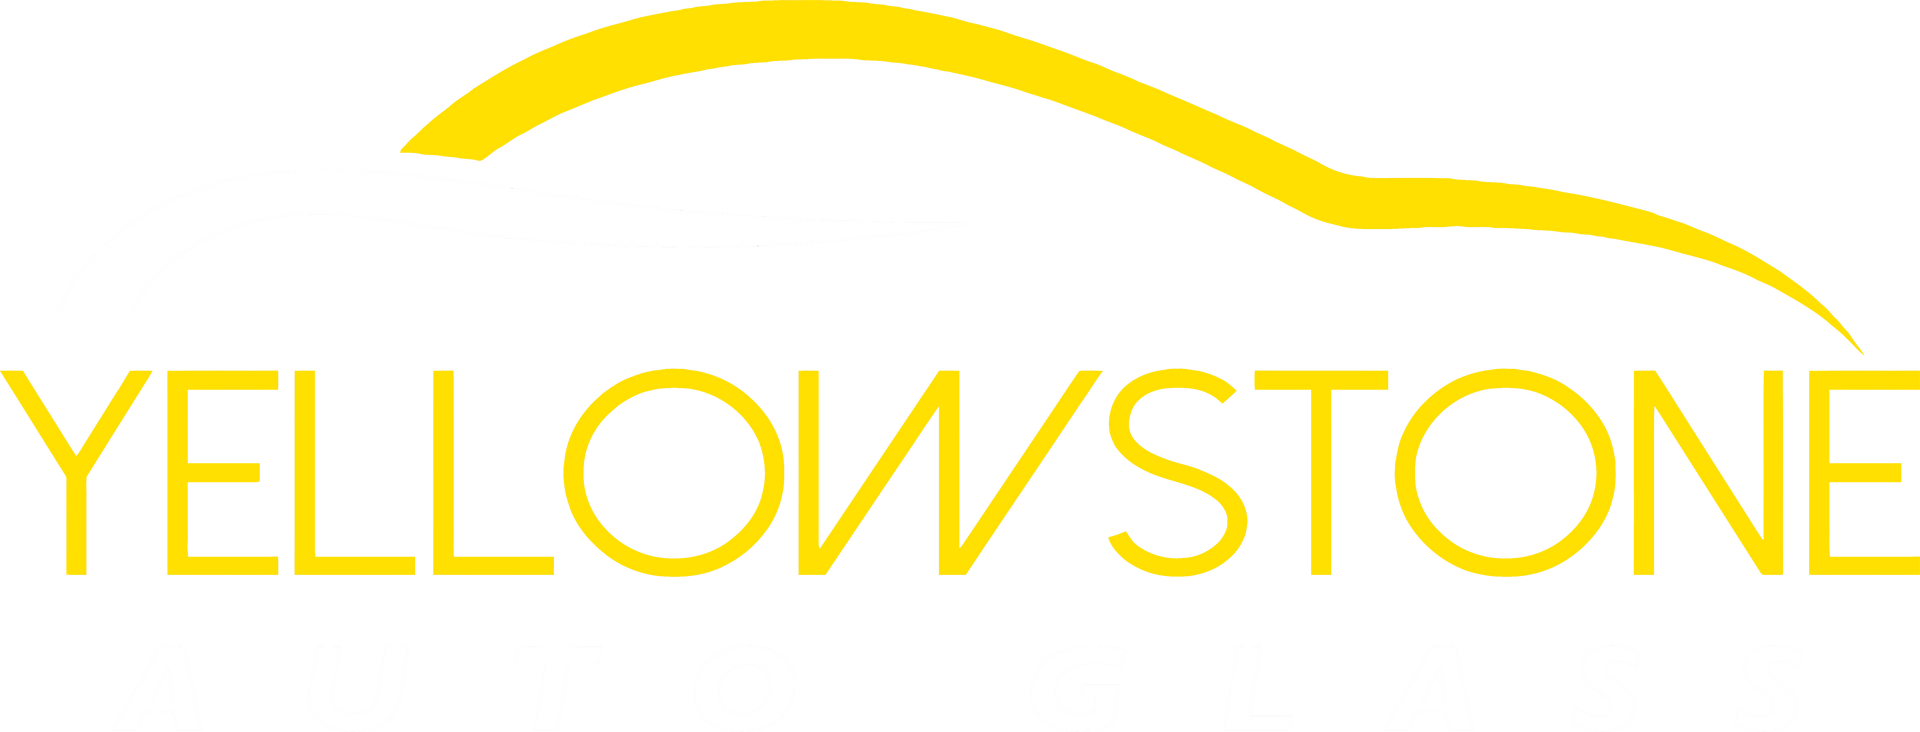 Yellowstone Auto Glass  